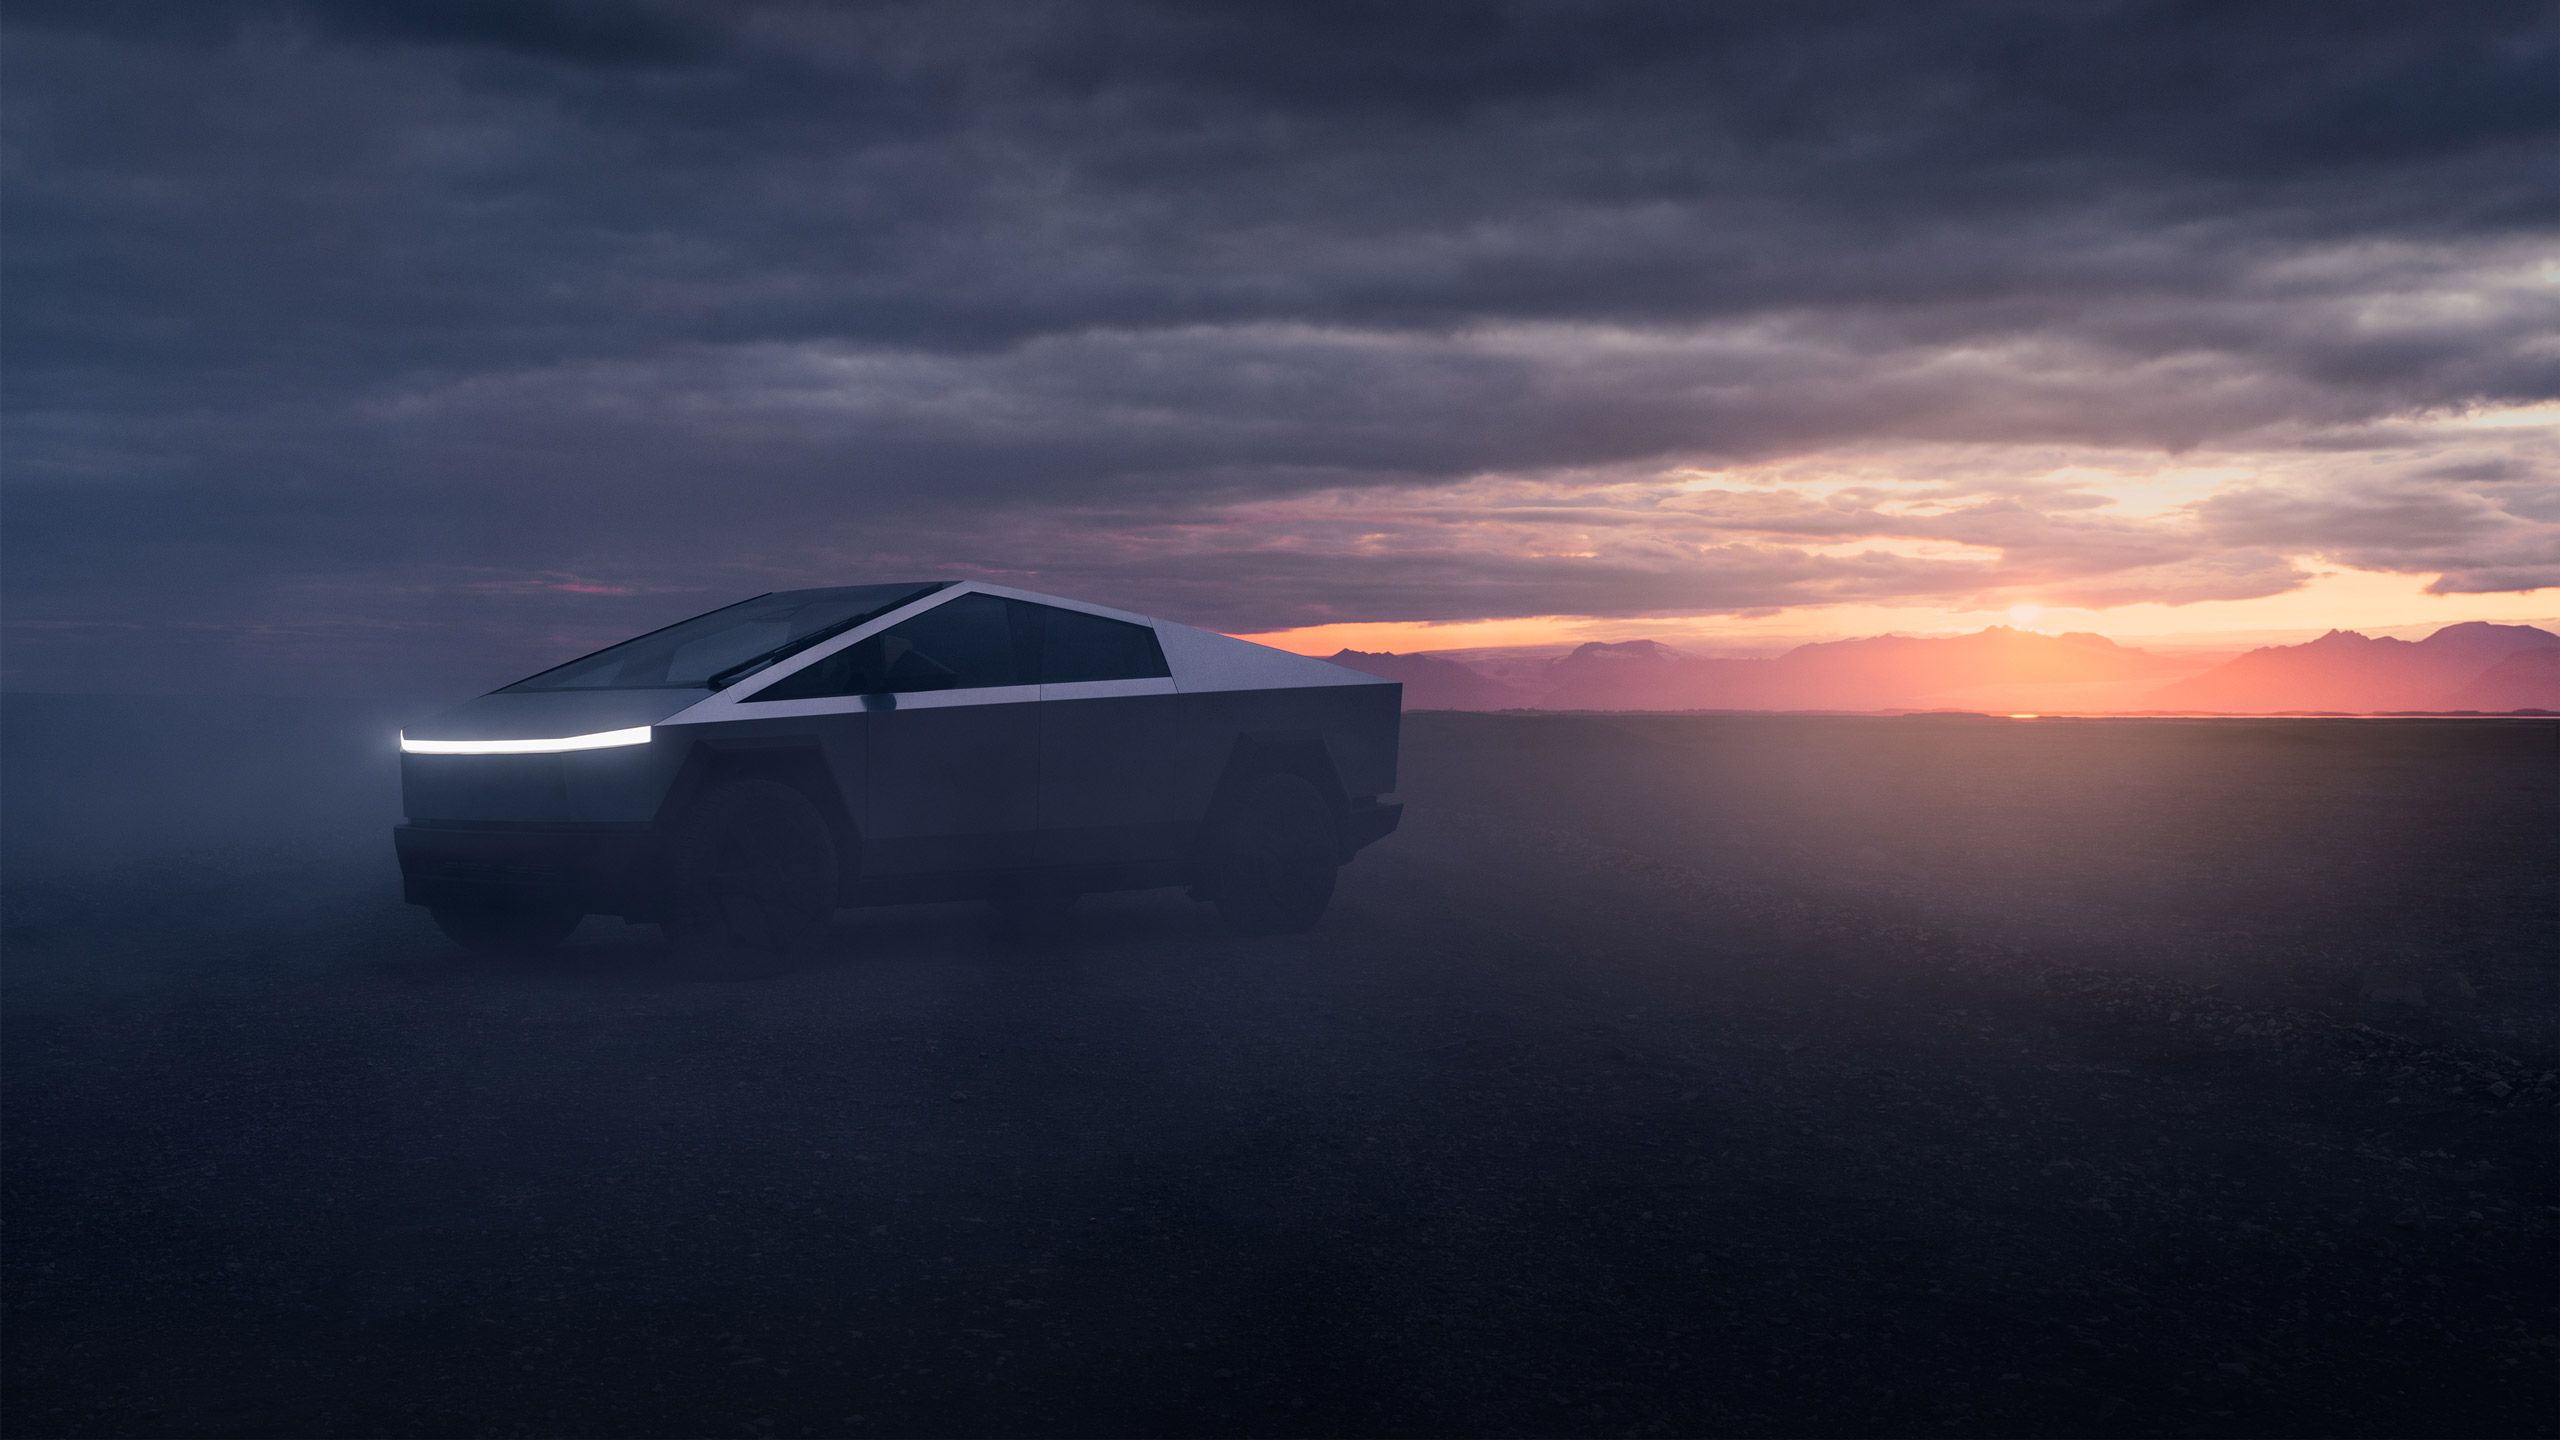 A Tesla Cybertruck illuminates its lights at dusk